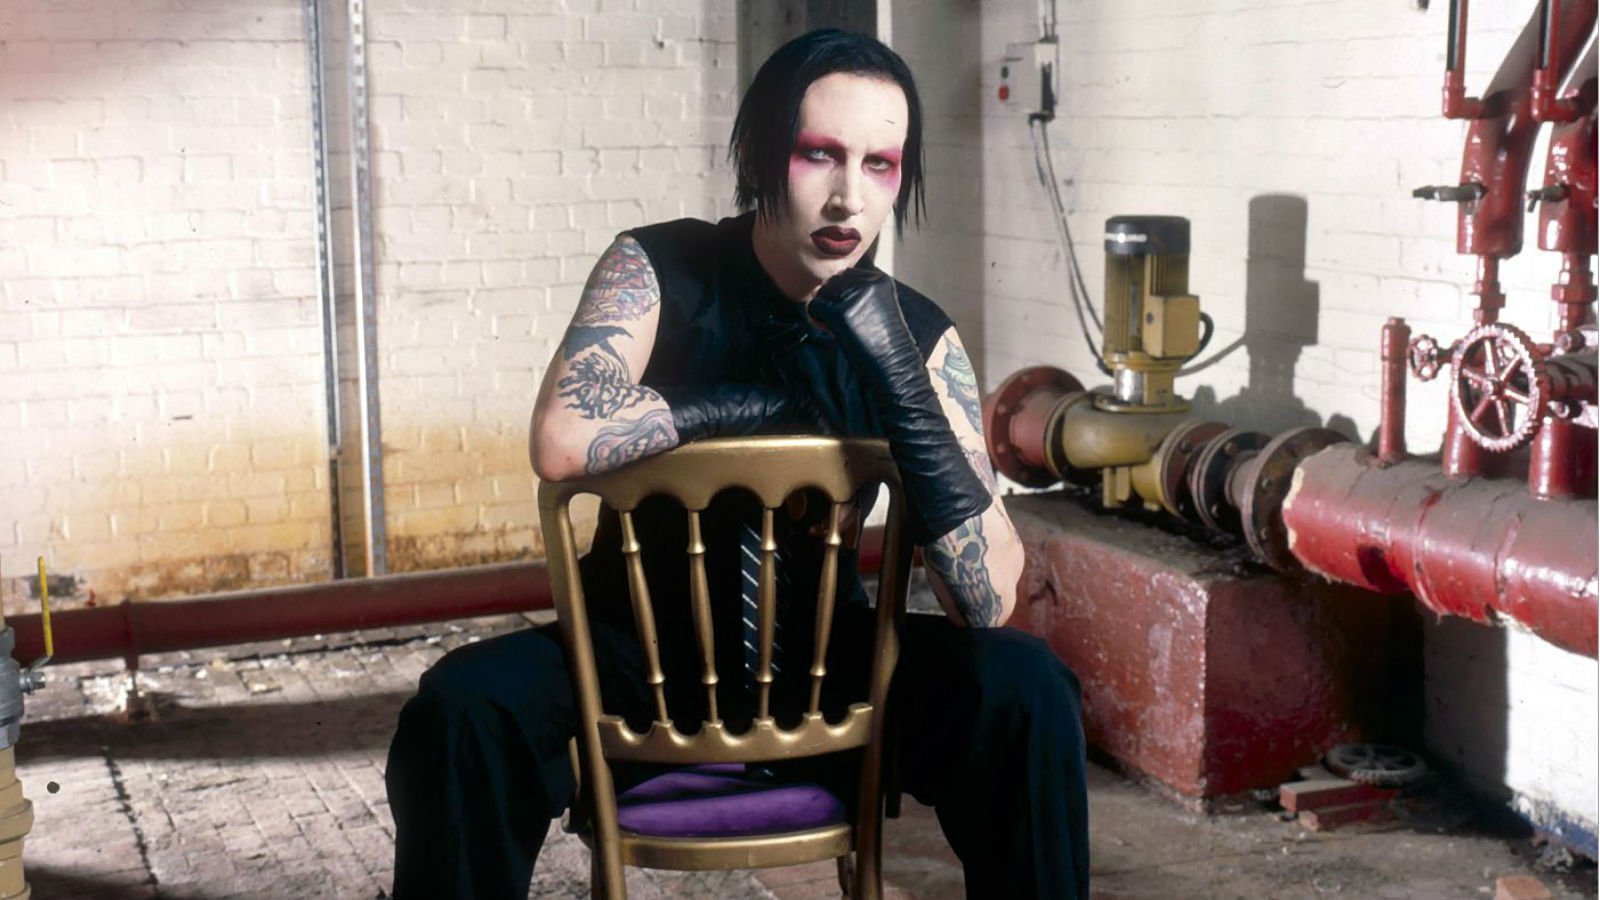 marilyn, Manson, Industrial, Metal, Heavy, Glam, Shock, Hard, Rock Wallpaper